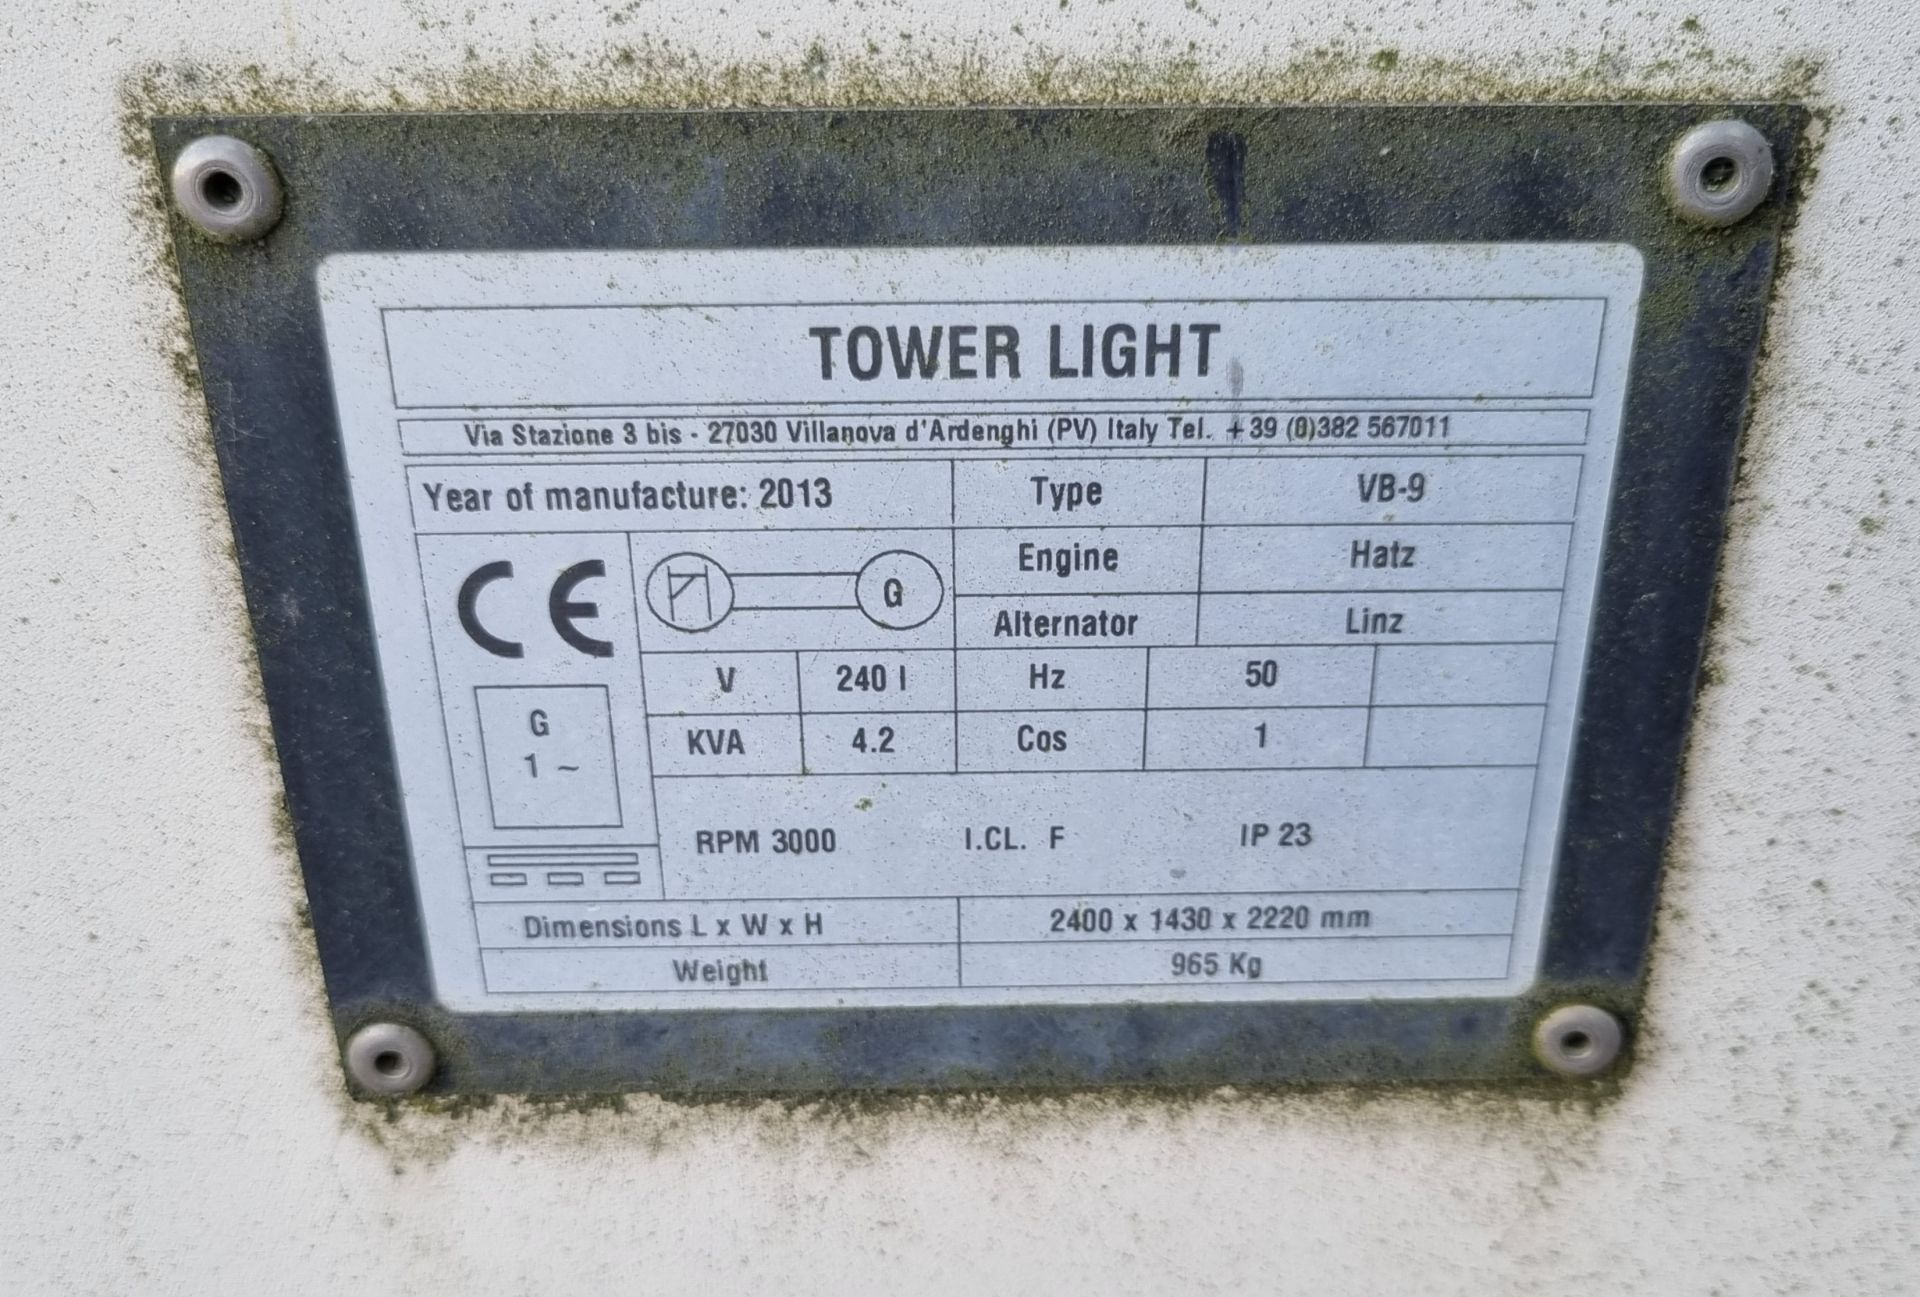 Towerlight VB9 4x400W metal halide lighting tower - Hatz 1B20-4 diesel engine - Linz E1C10S F gen - Image 6 of 18